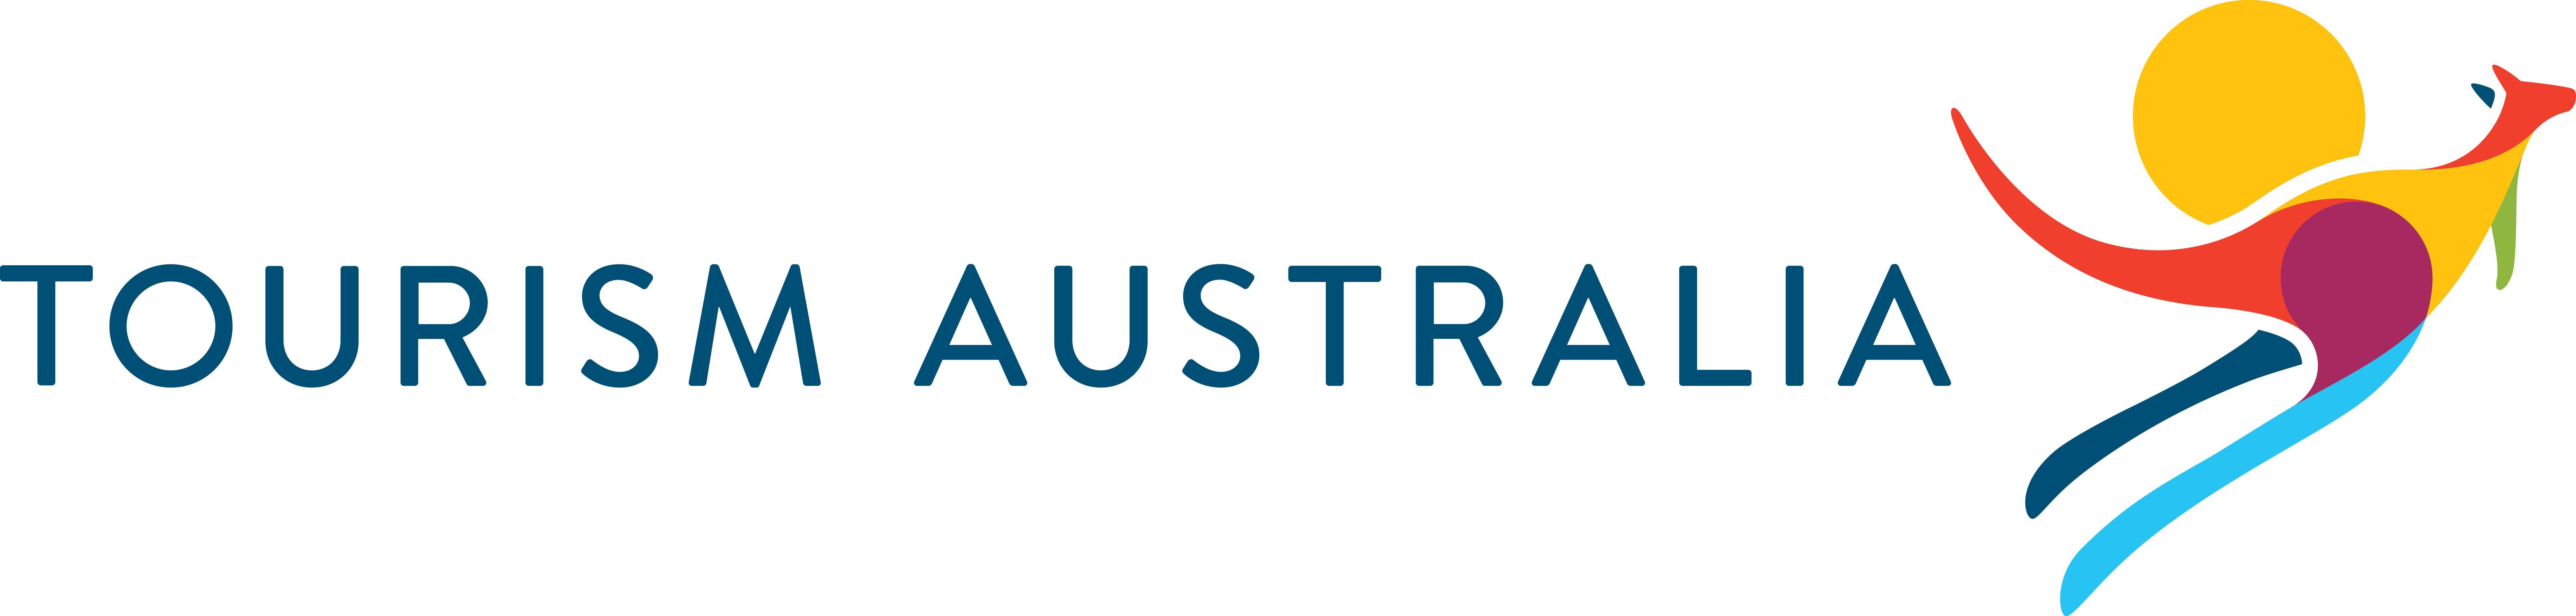 Tourism Australia Logo - Tourism Australia logo - RACV Victorian Tourism Awards